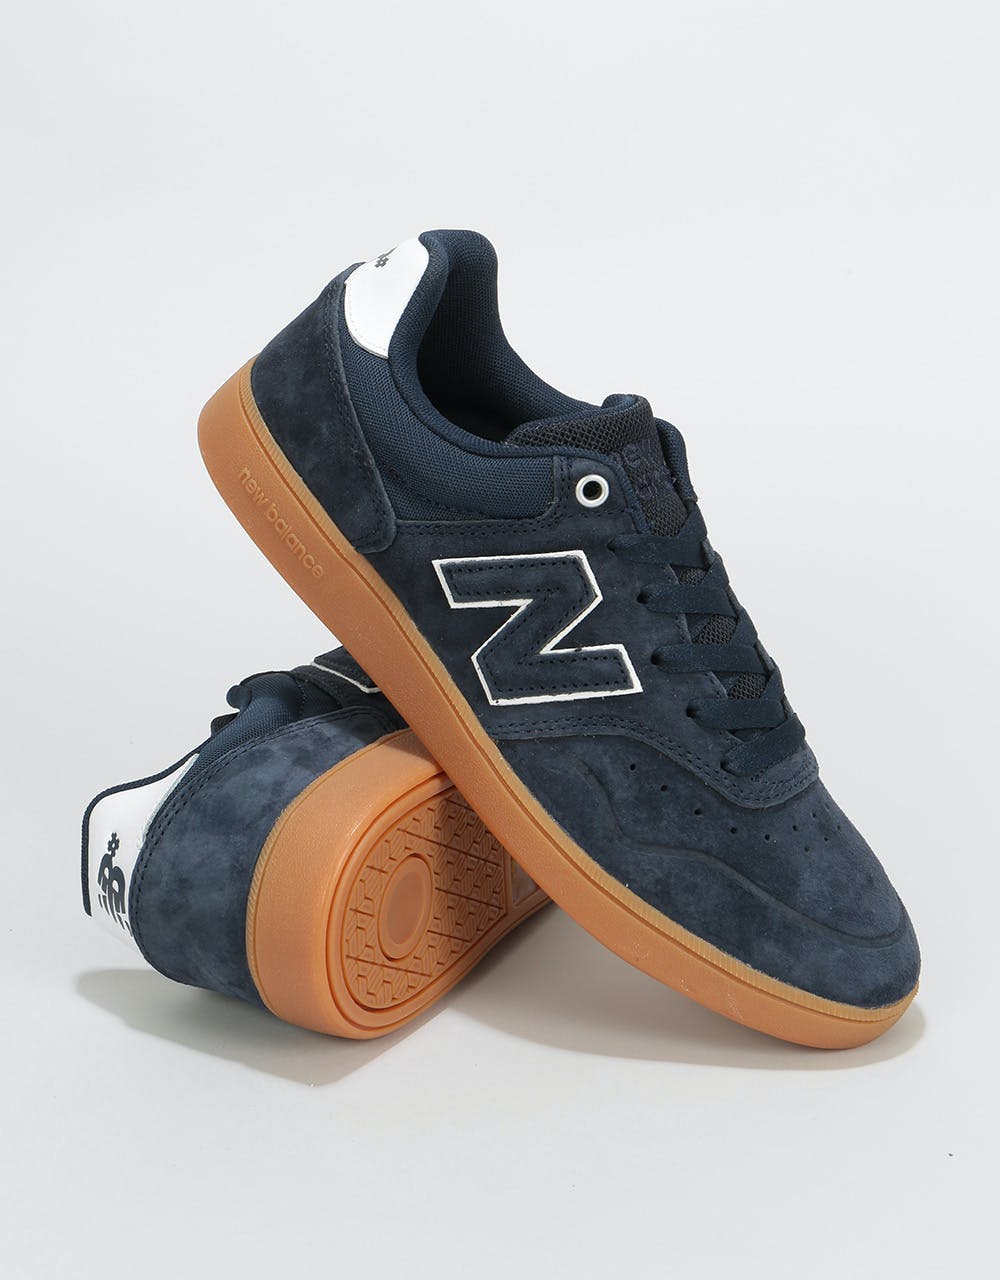 New Balance Numeric 288 Skate Shoes - Navy/Gum